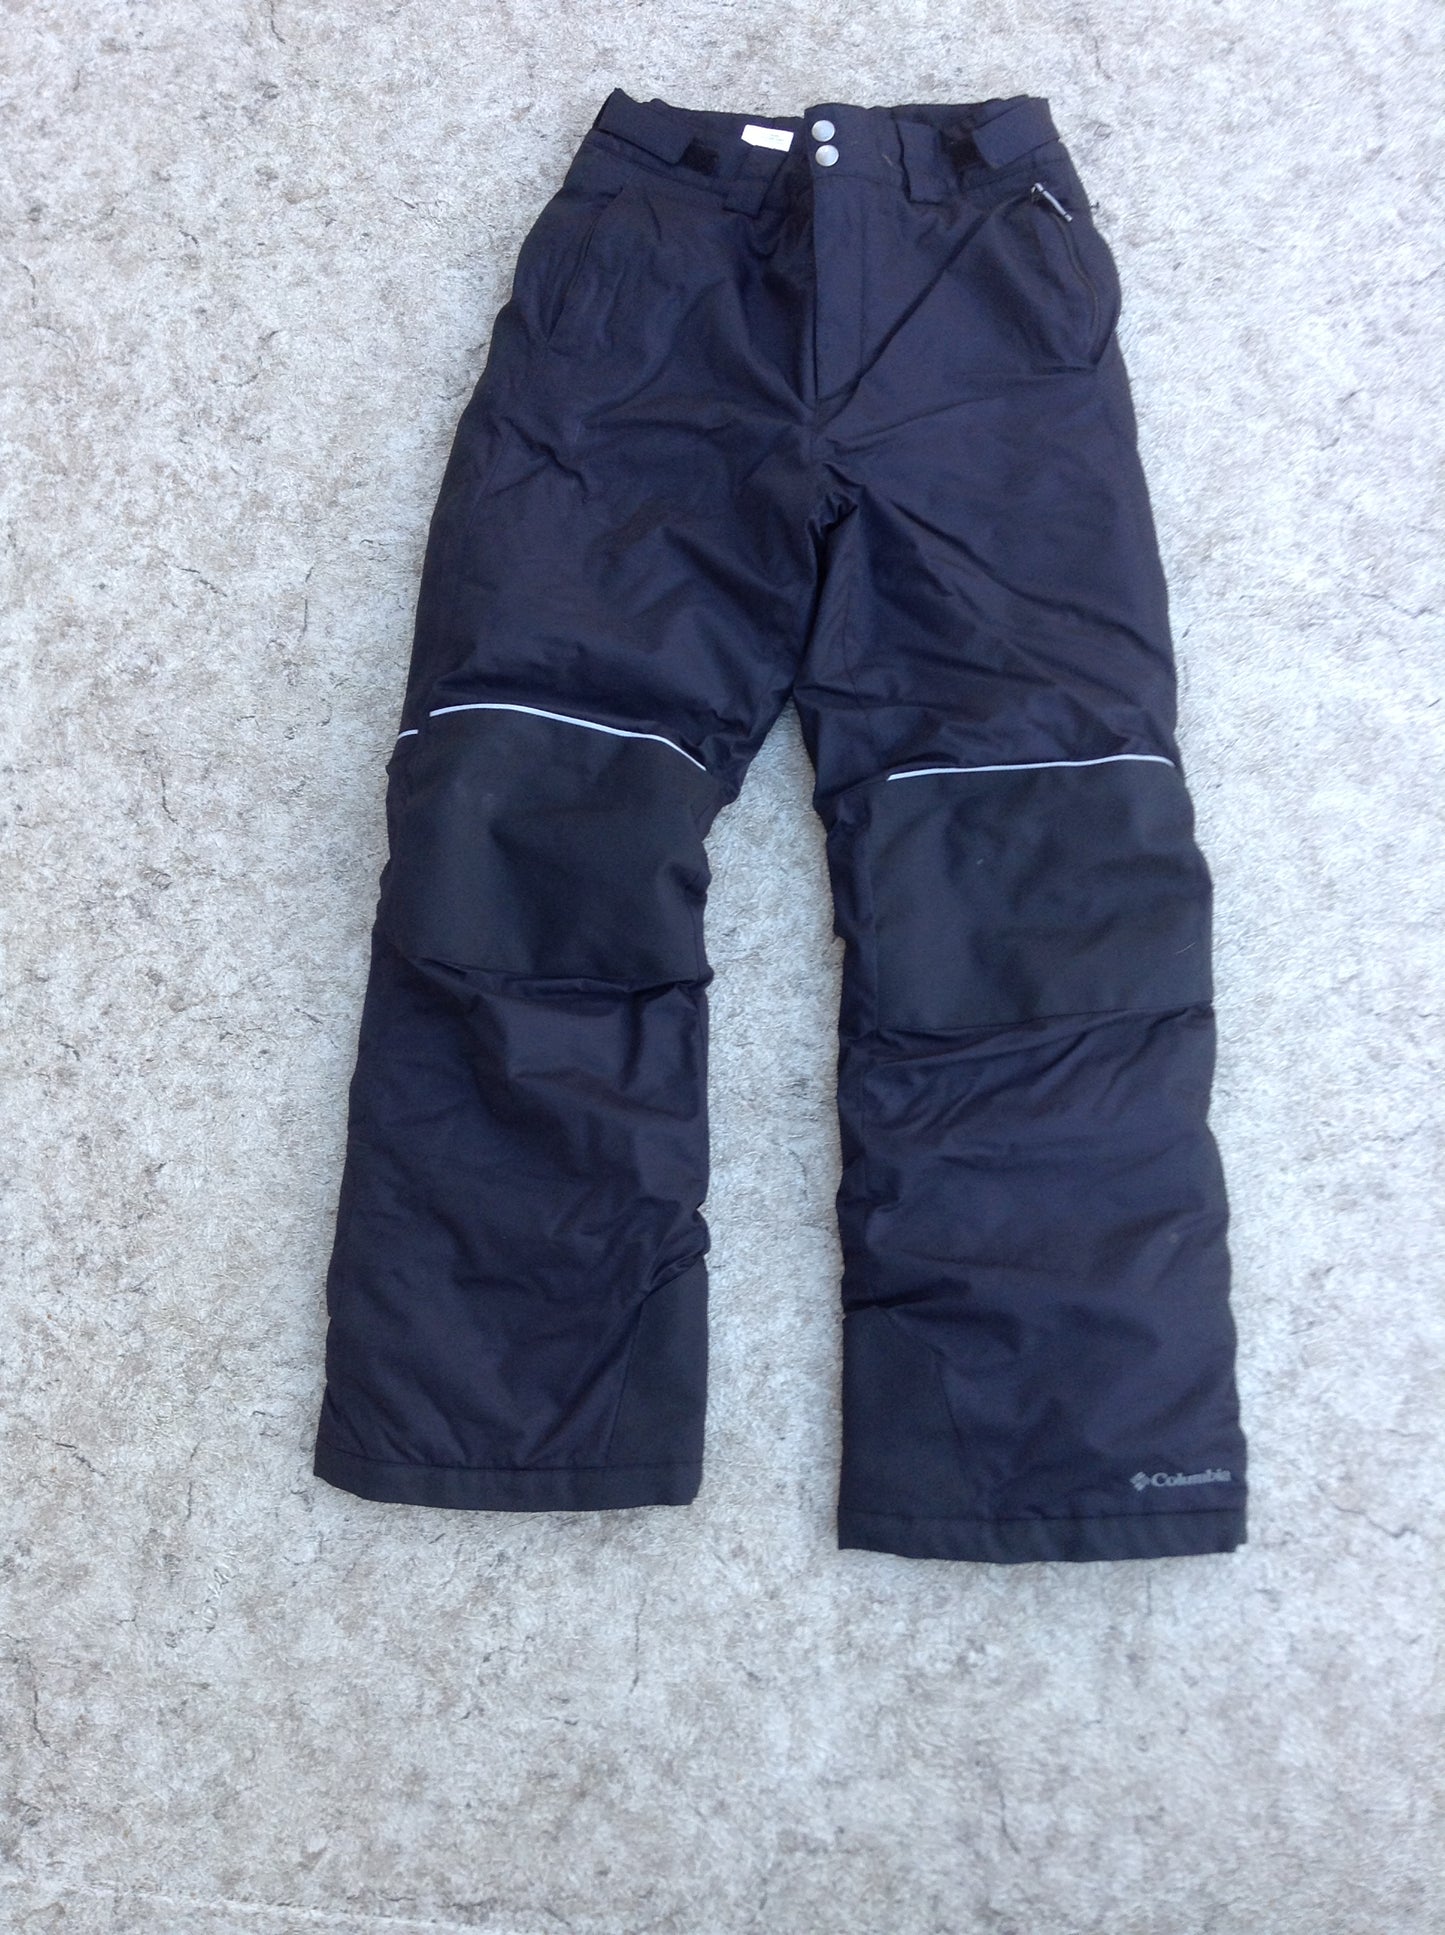 Snow Pants Child Size 14-16 Columbia Black New Demo Model